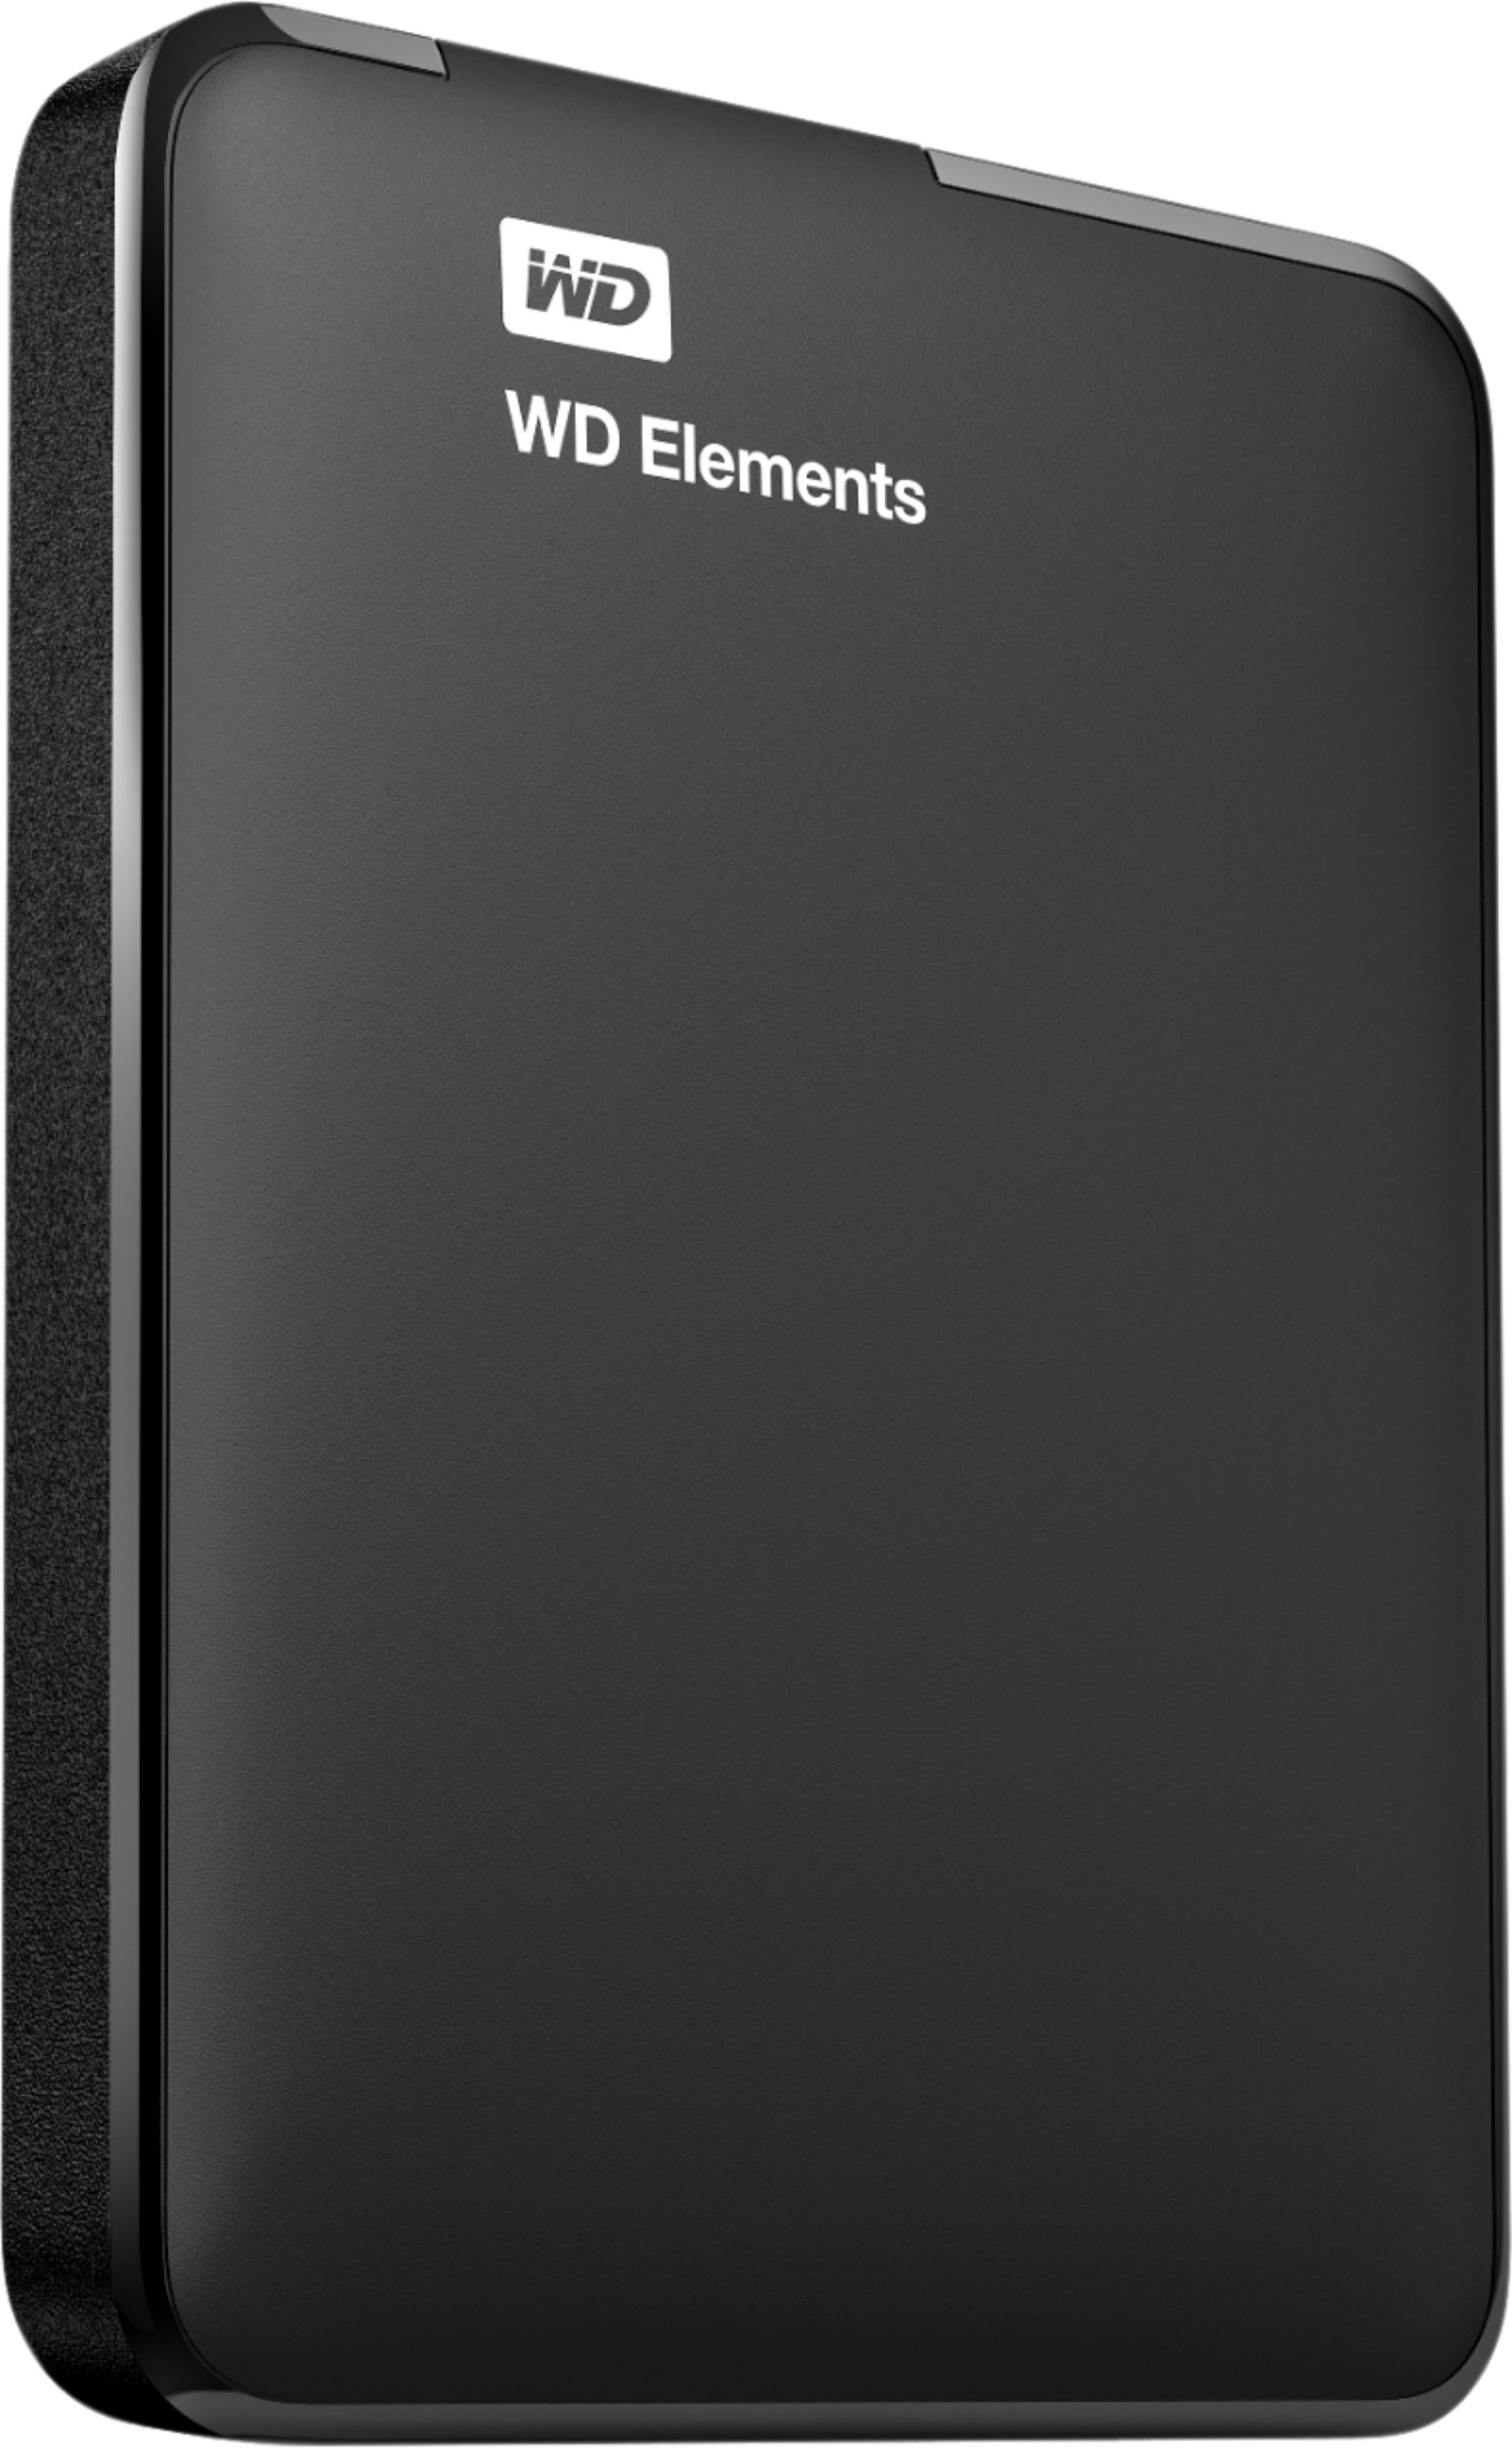 Western Digital WD Elements 1TB HDD USB 3.0 Portable External Hard Drive 